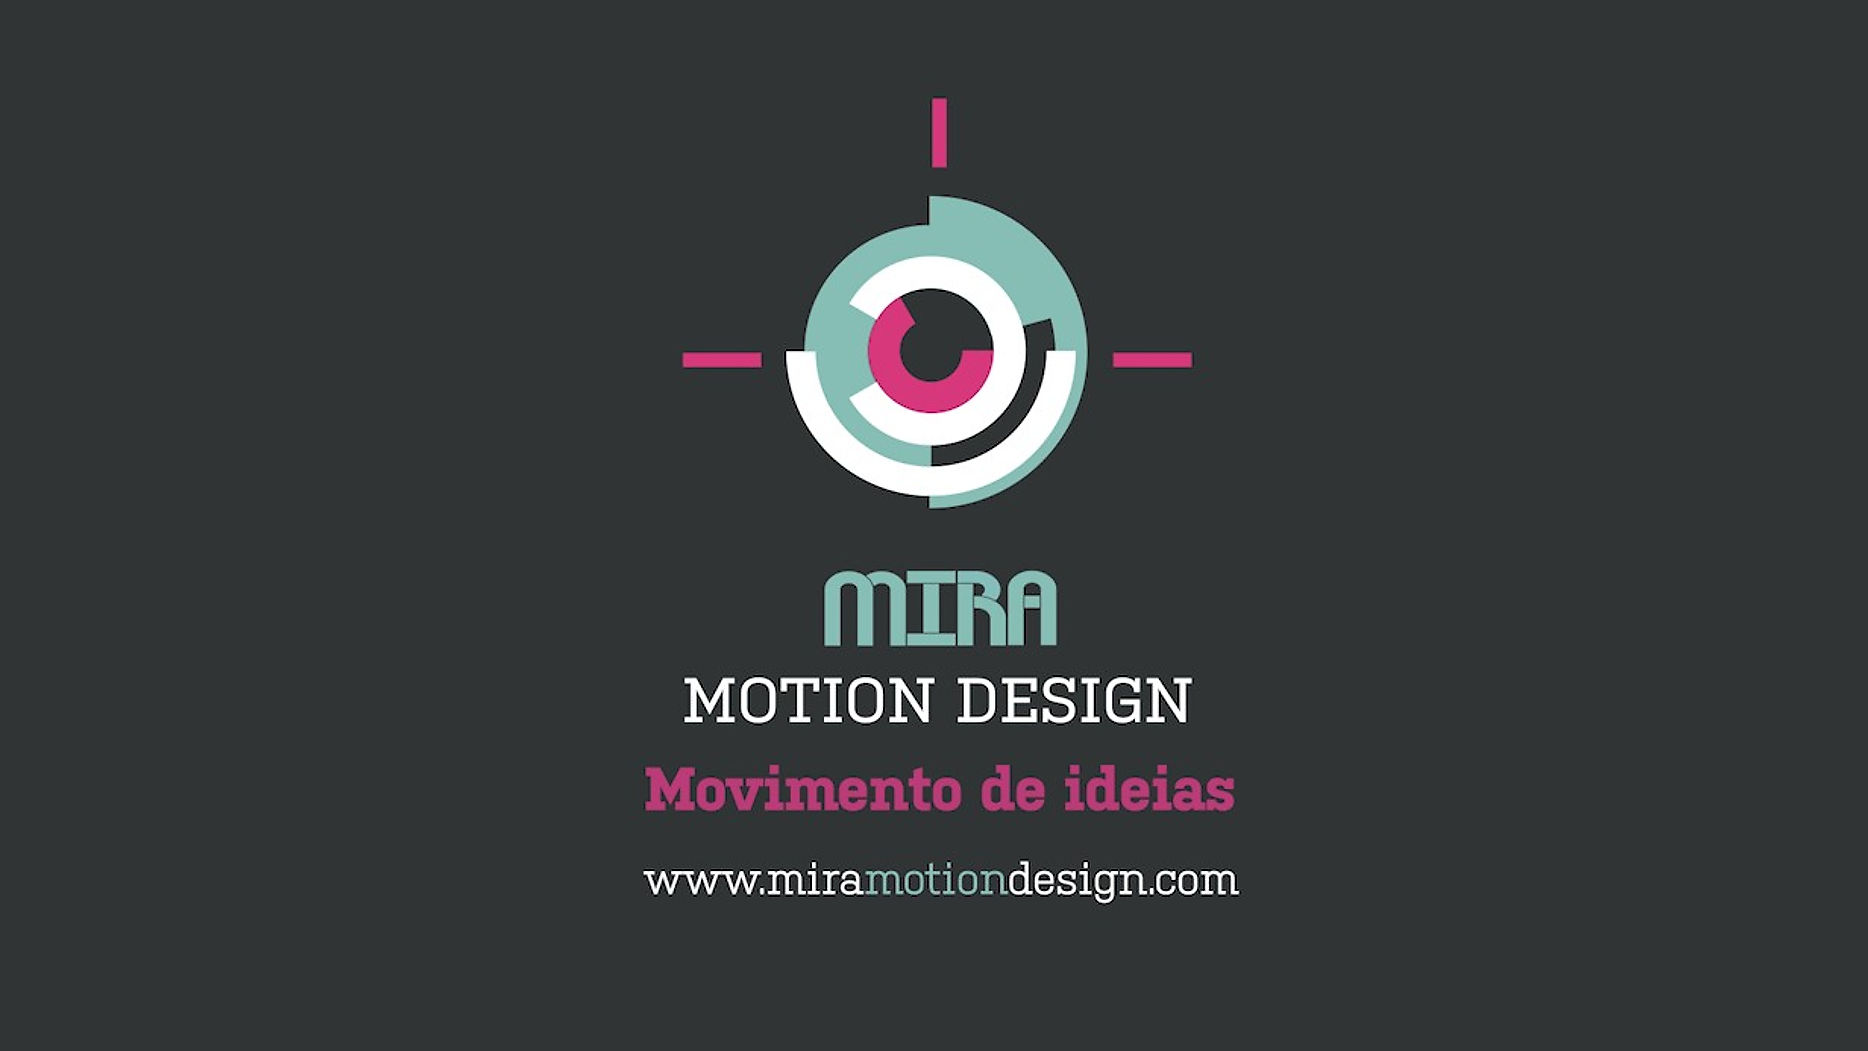 Portfólio Mira Motion Design